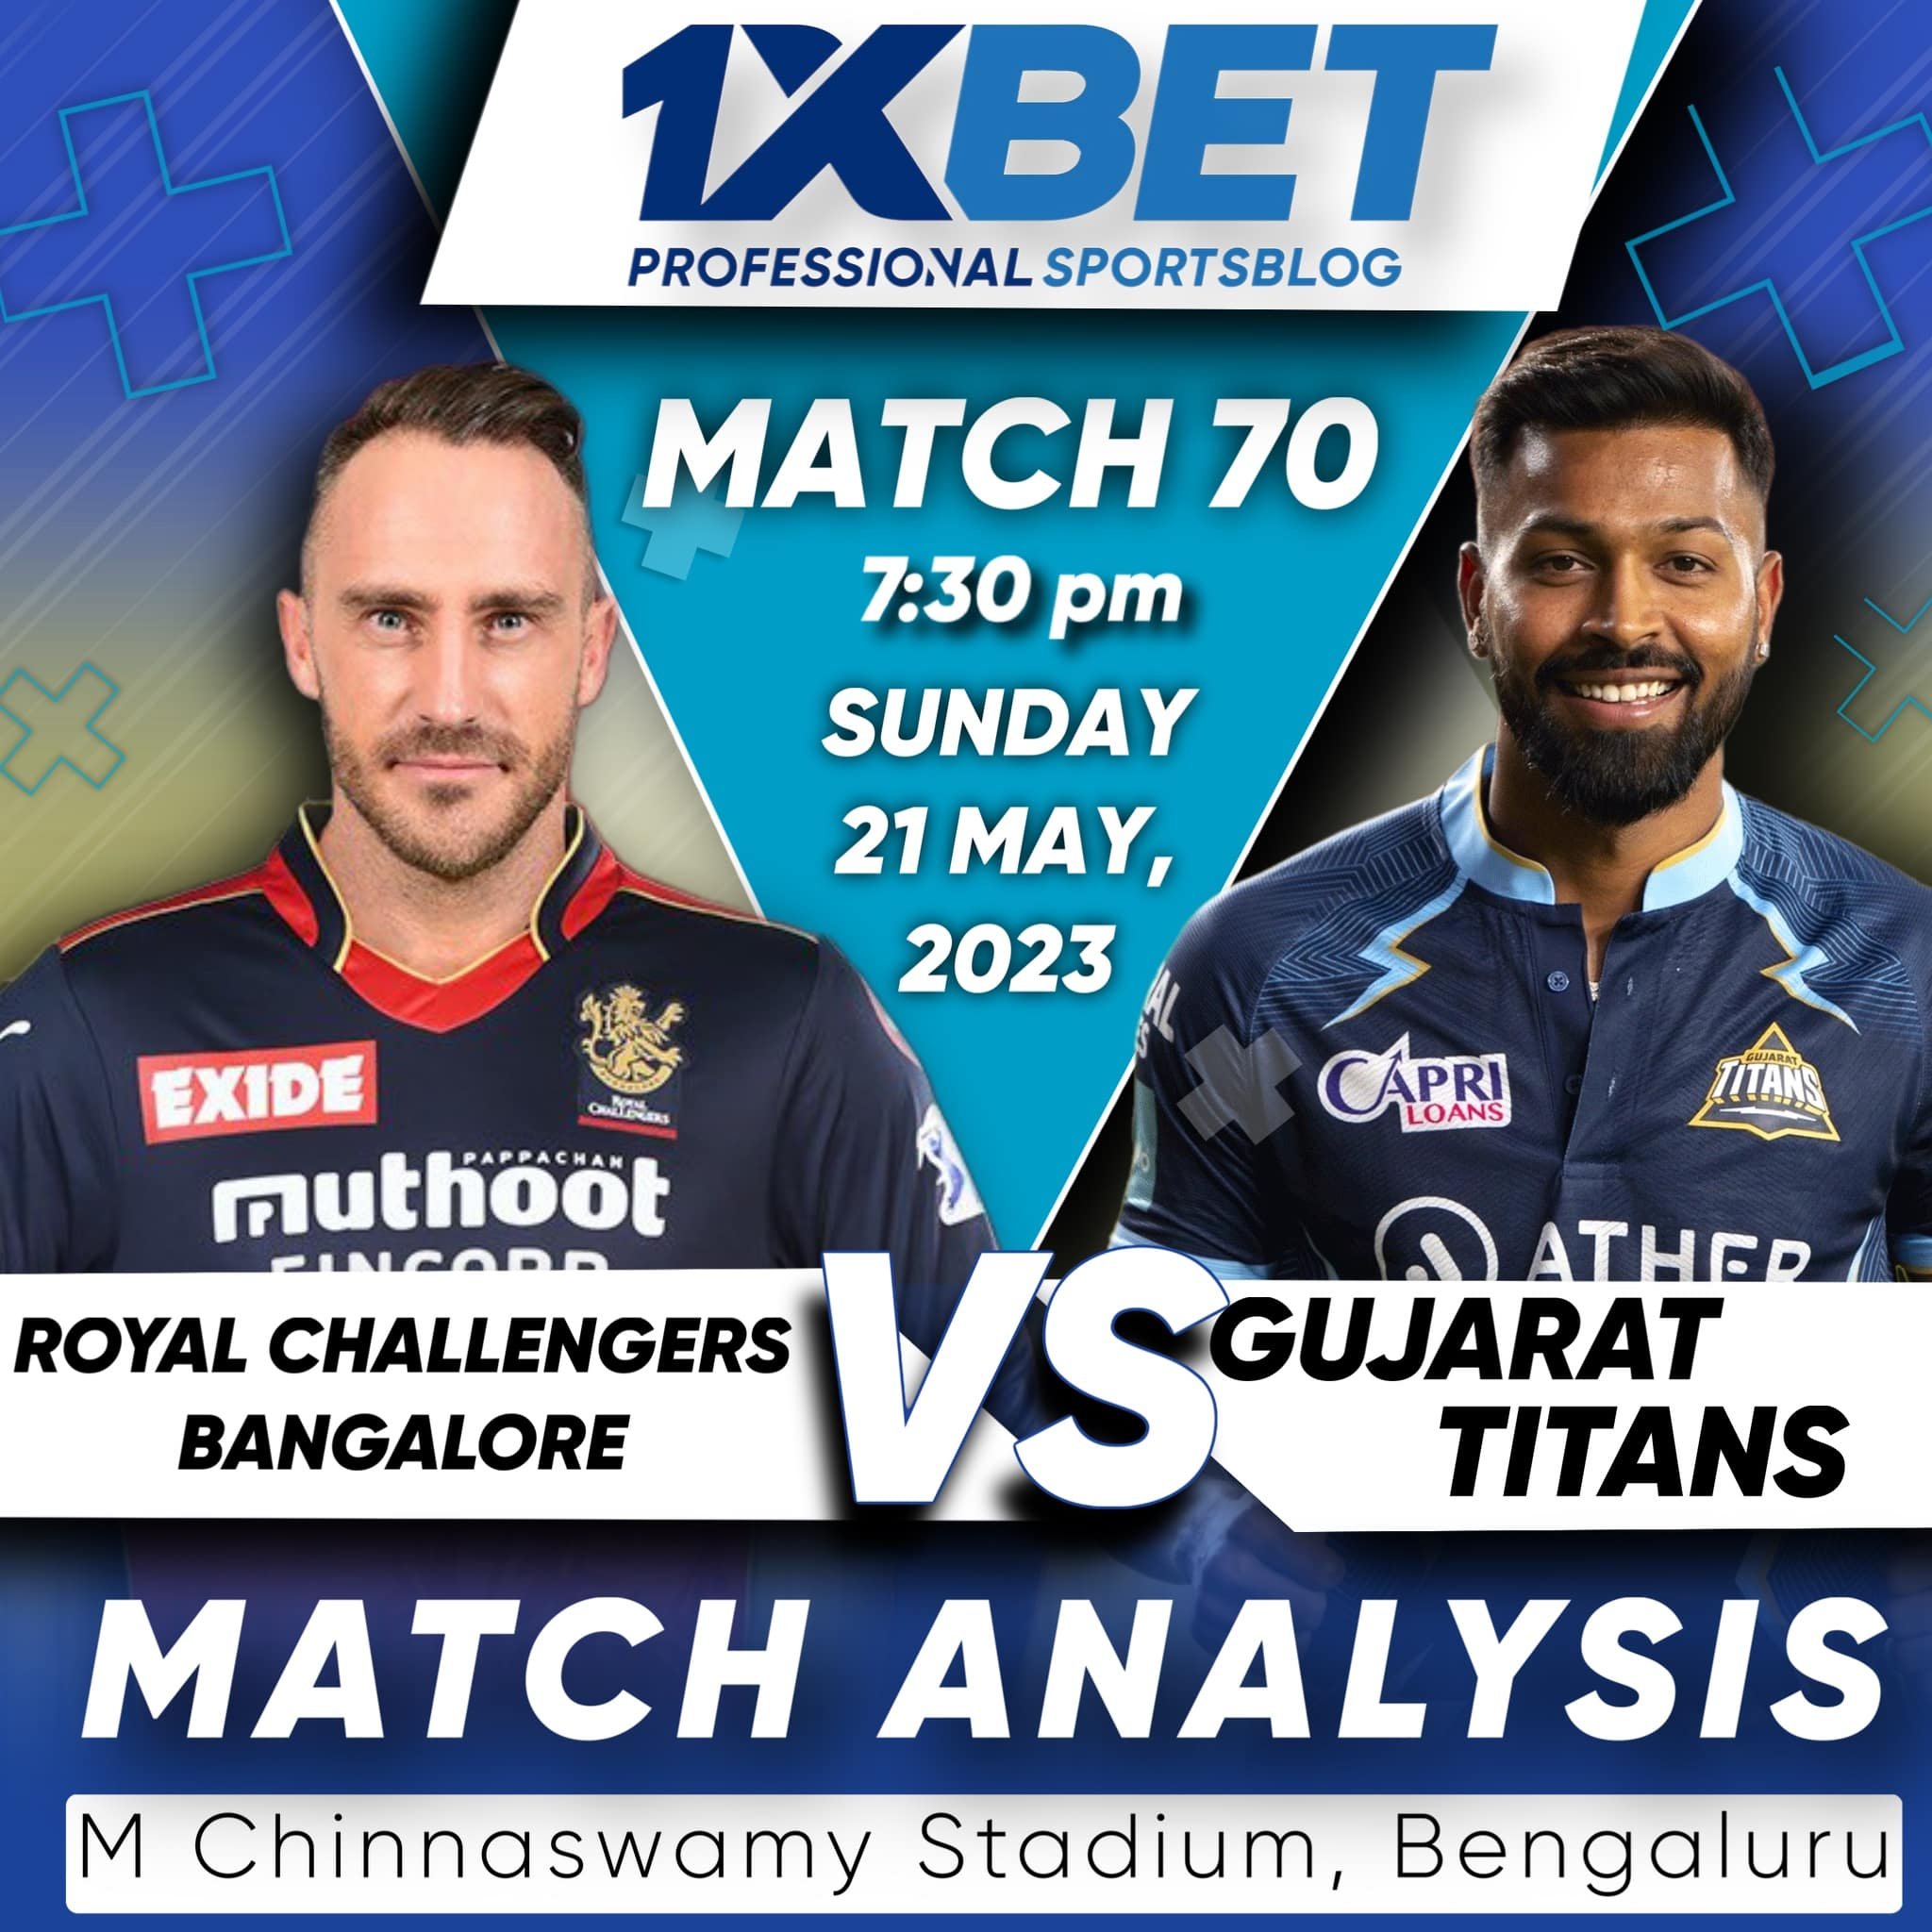 Gujarat Titans vs Royal Challengers Bangalore, IPL 2023, 70th Match Analysis